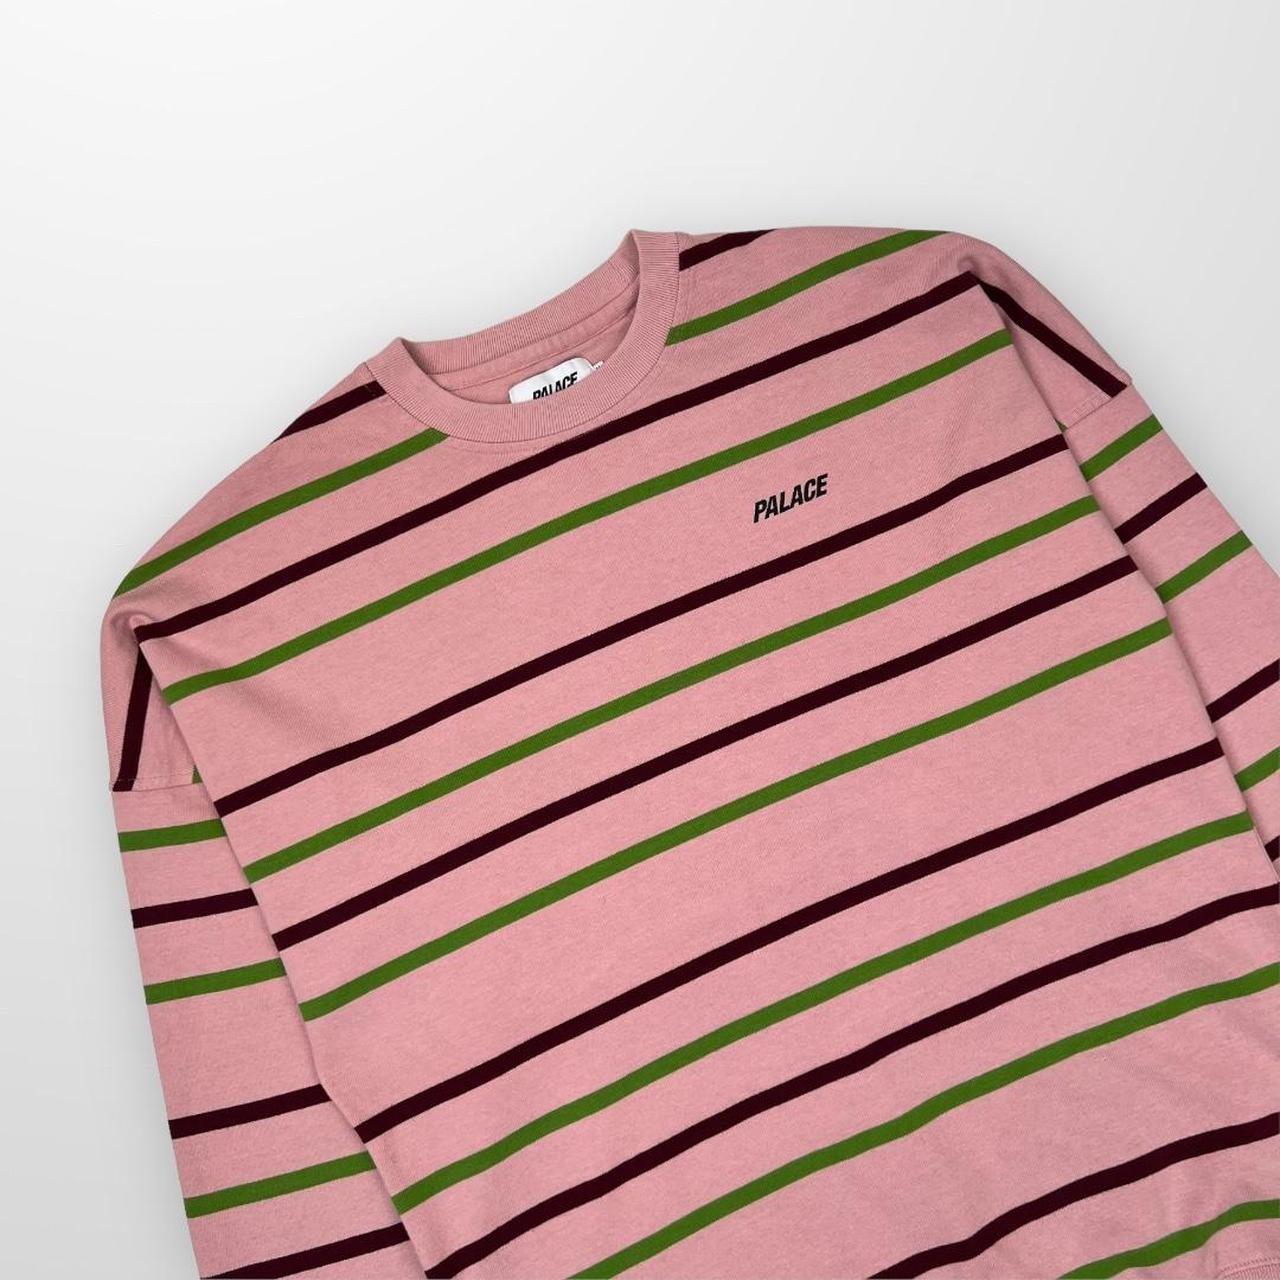 Palace Stripe Drop Shoulder Crewneck Sweatshirt In Pink